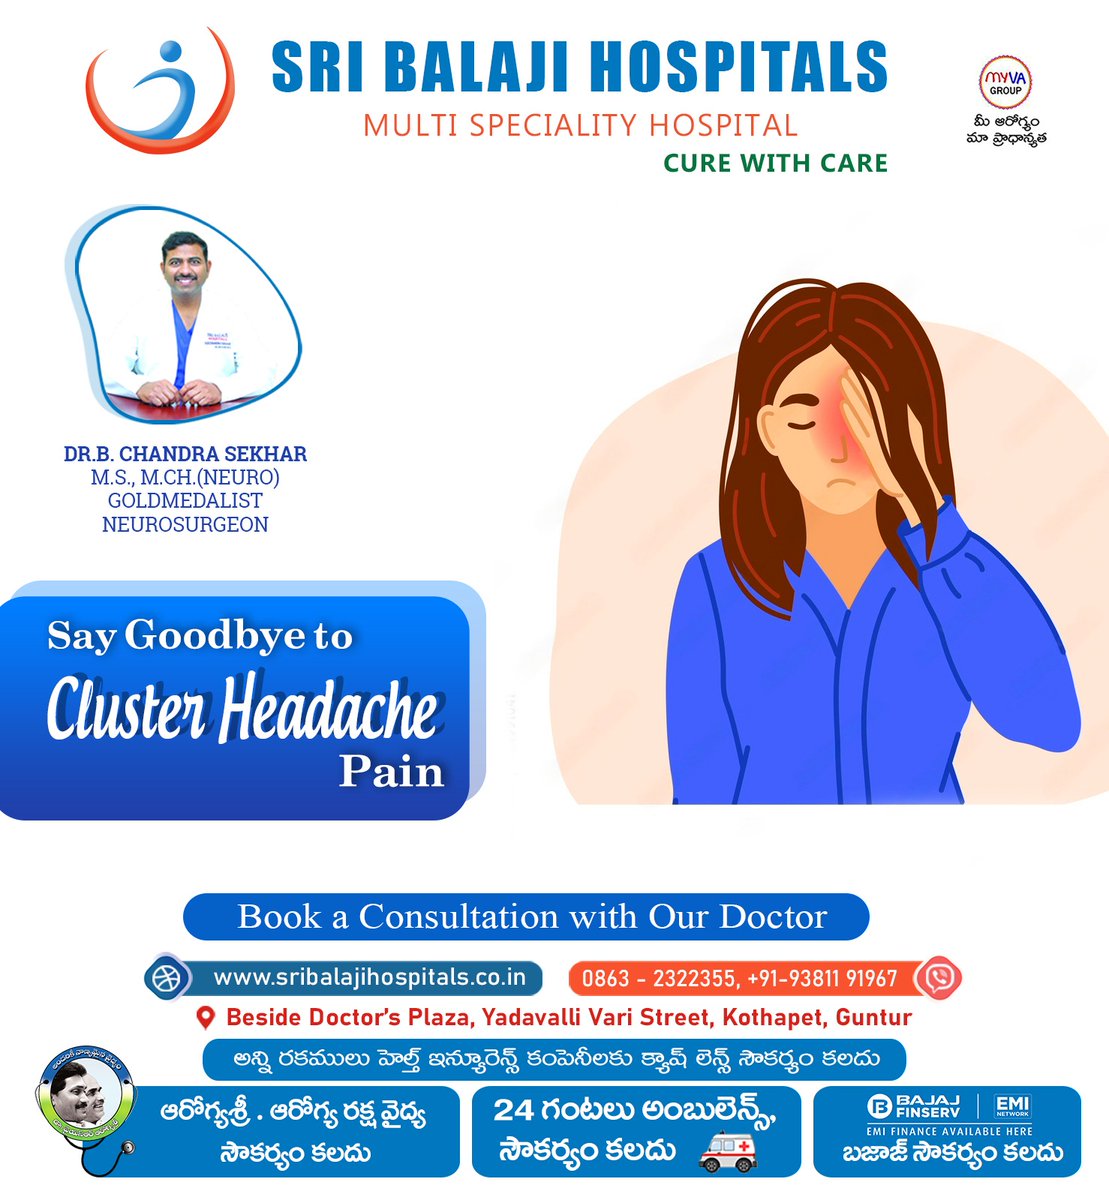 Say Goodbye to Cluster Headache pain consult our Dr. B. Chandra Sekhar

#HealthcareExpert #SriBalajiHospital #drchandrasekhar